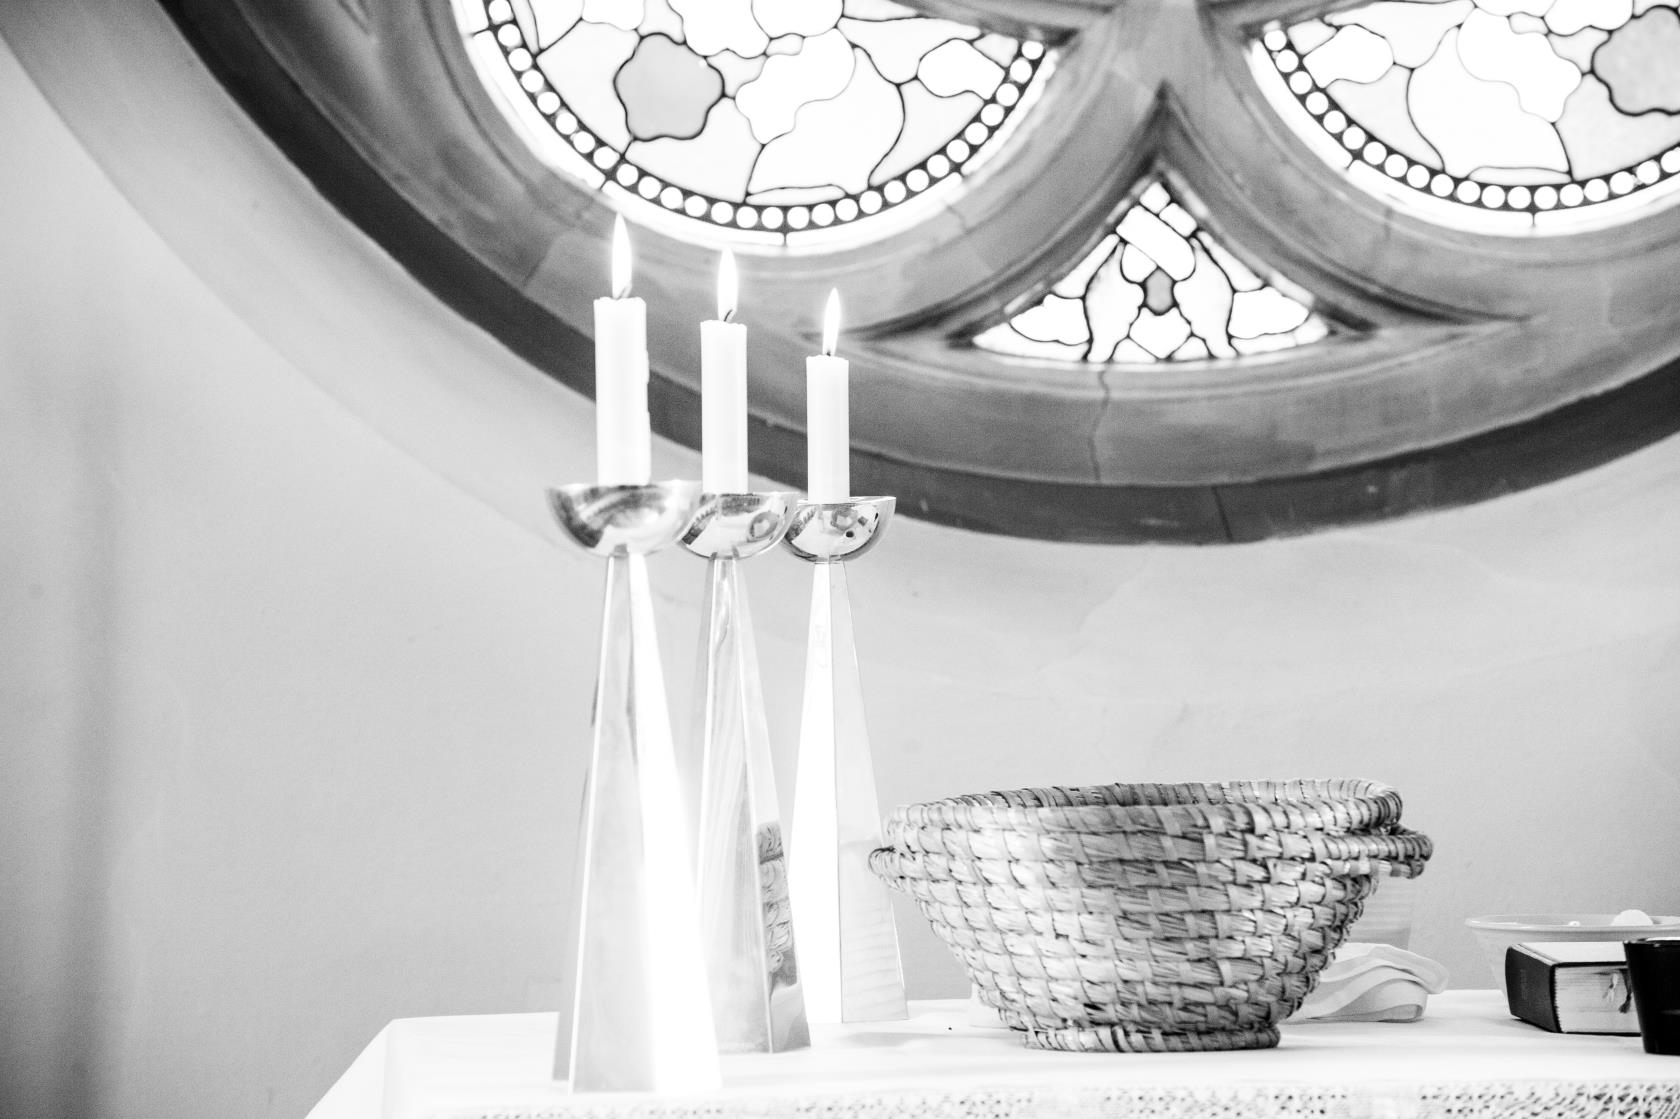 En svartvit bild av tre ljusstakar och en korg på ett altare.